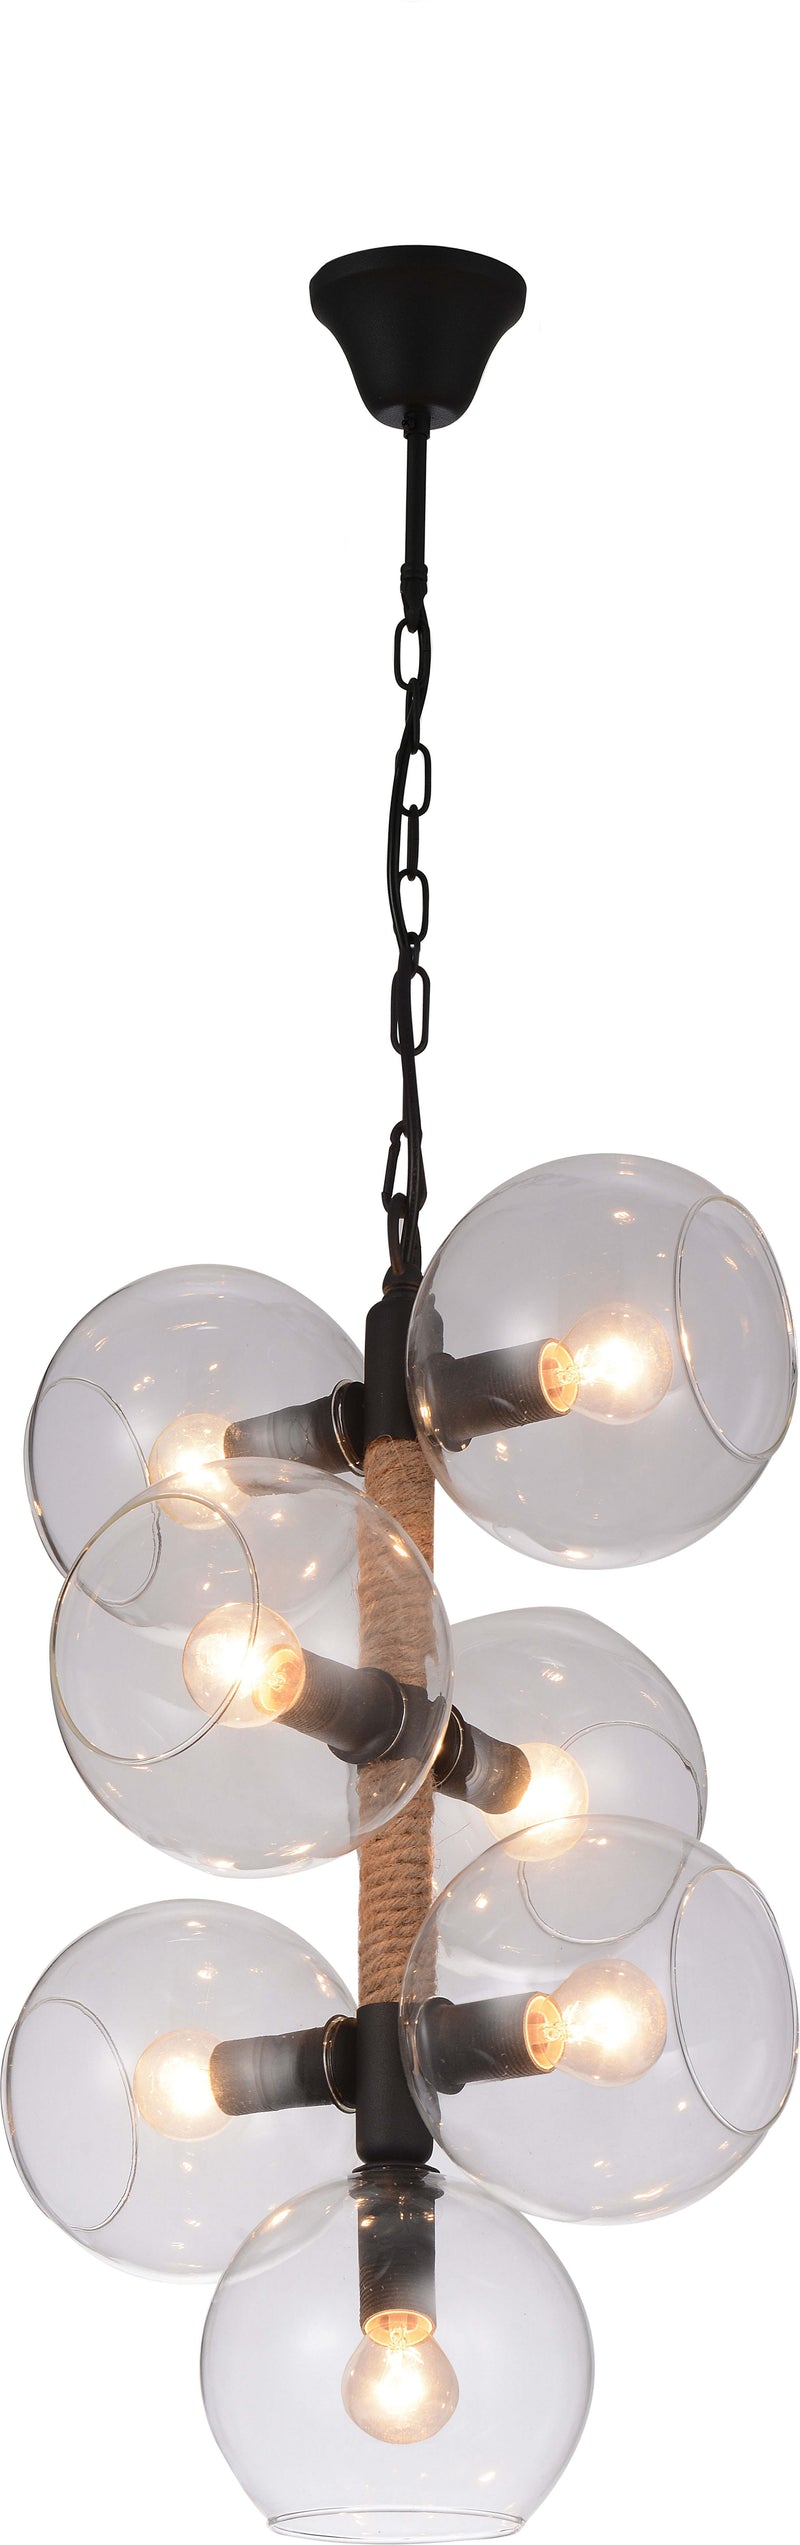 Okee - Ceiling Lamp - Black Satin & Amber Glass